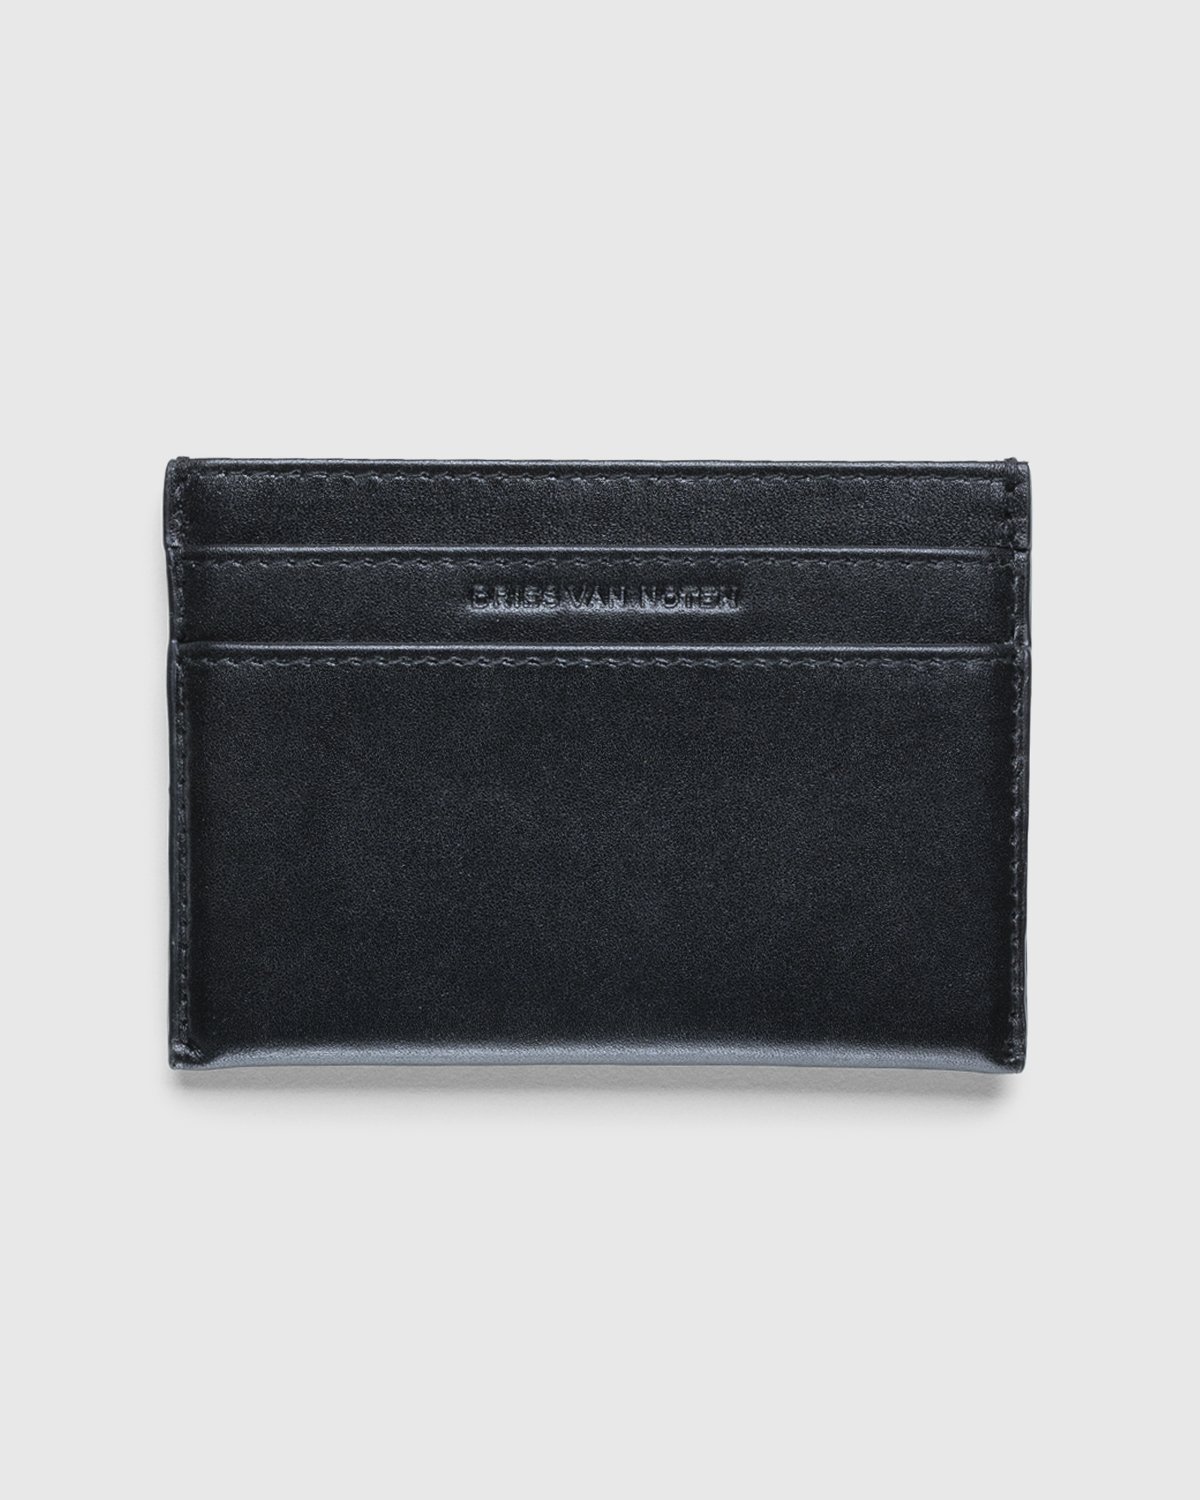 Dries van Noten - Leather Card Holder Black - Accessories - Black - Image 1